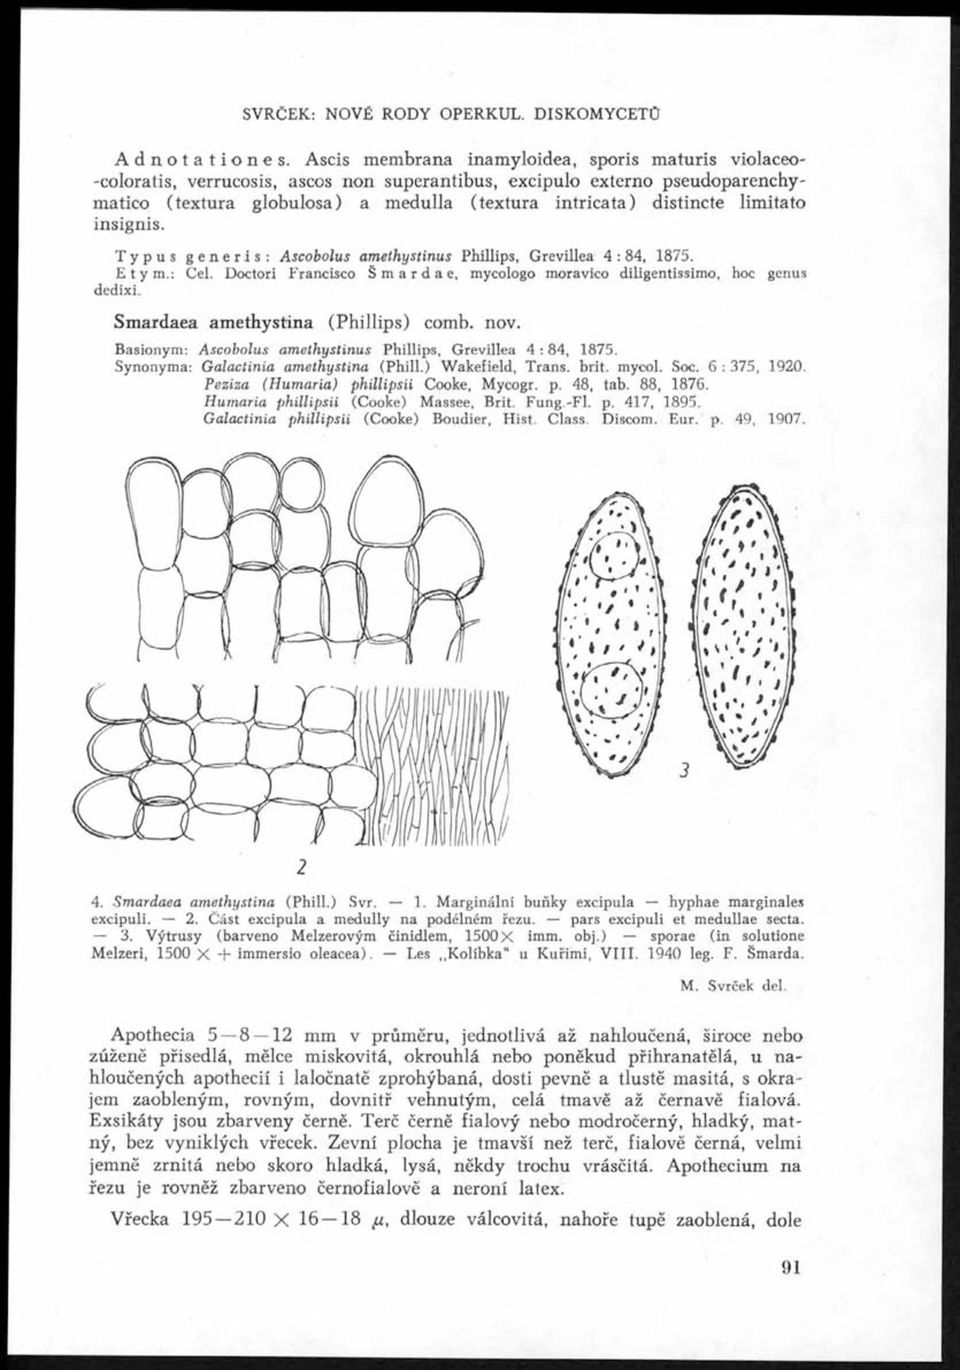 limita to insignis. Typus generis: A scobolus am ethystinus Phillips, Grevillea 4 : 84, 1875. Etym.: Cel. Doctori Francisco Šmardae, mycologo moravico diligentissimo, hoc genus dedixi.